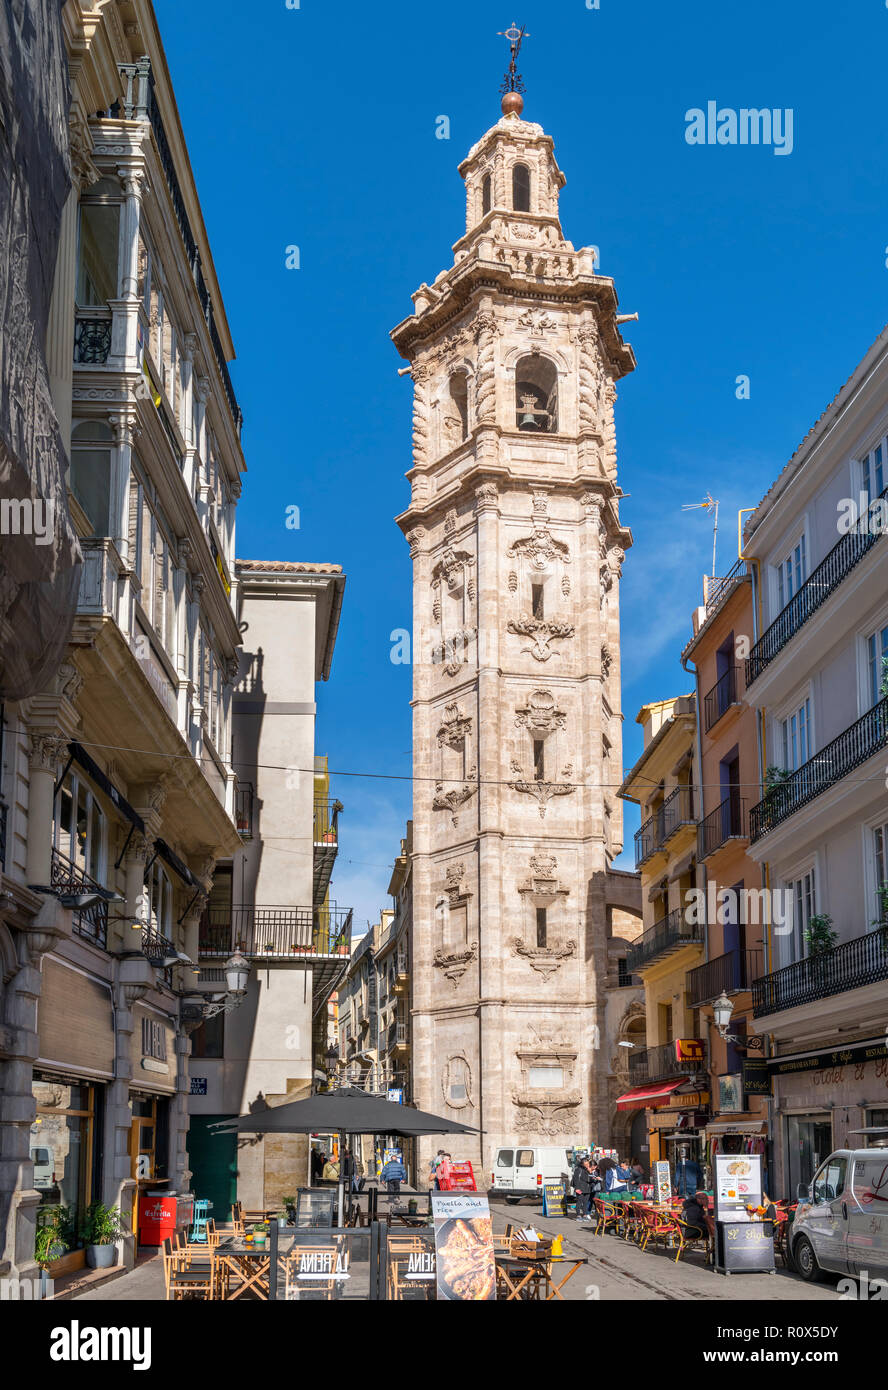 The Church of Santa Caterina Tower from Plaça de Santa Caterina in the old town, Valencia, Spain Stock Photo